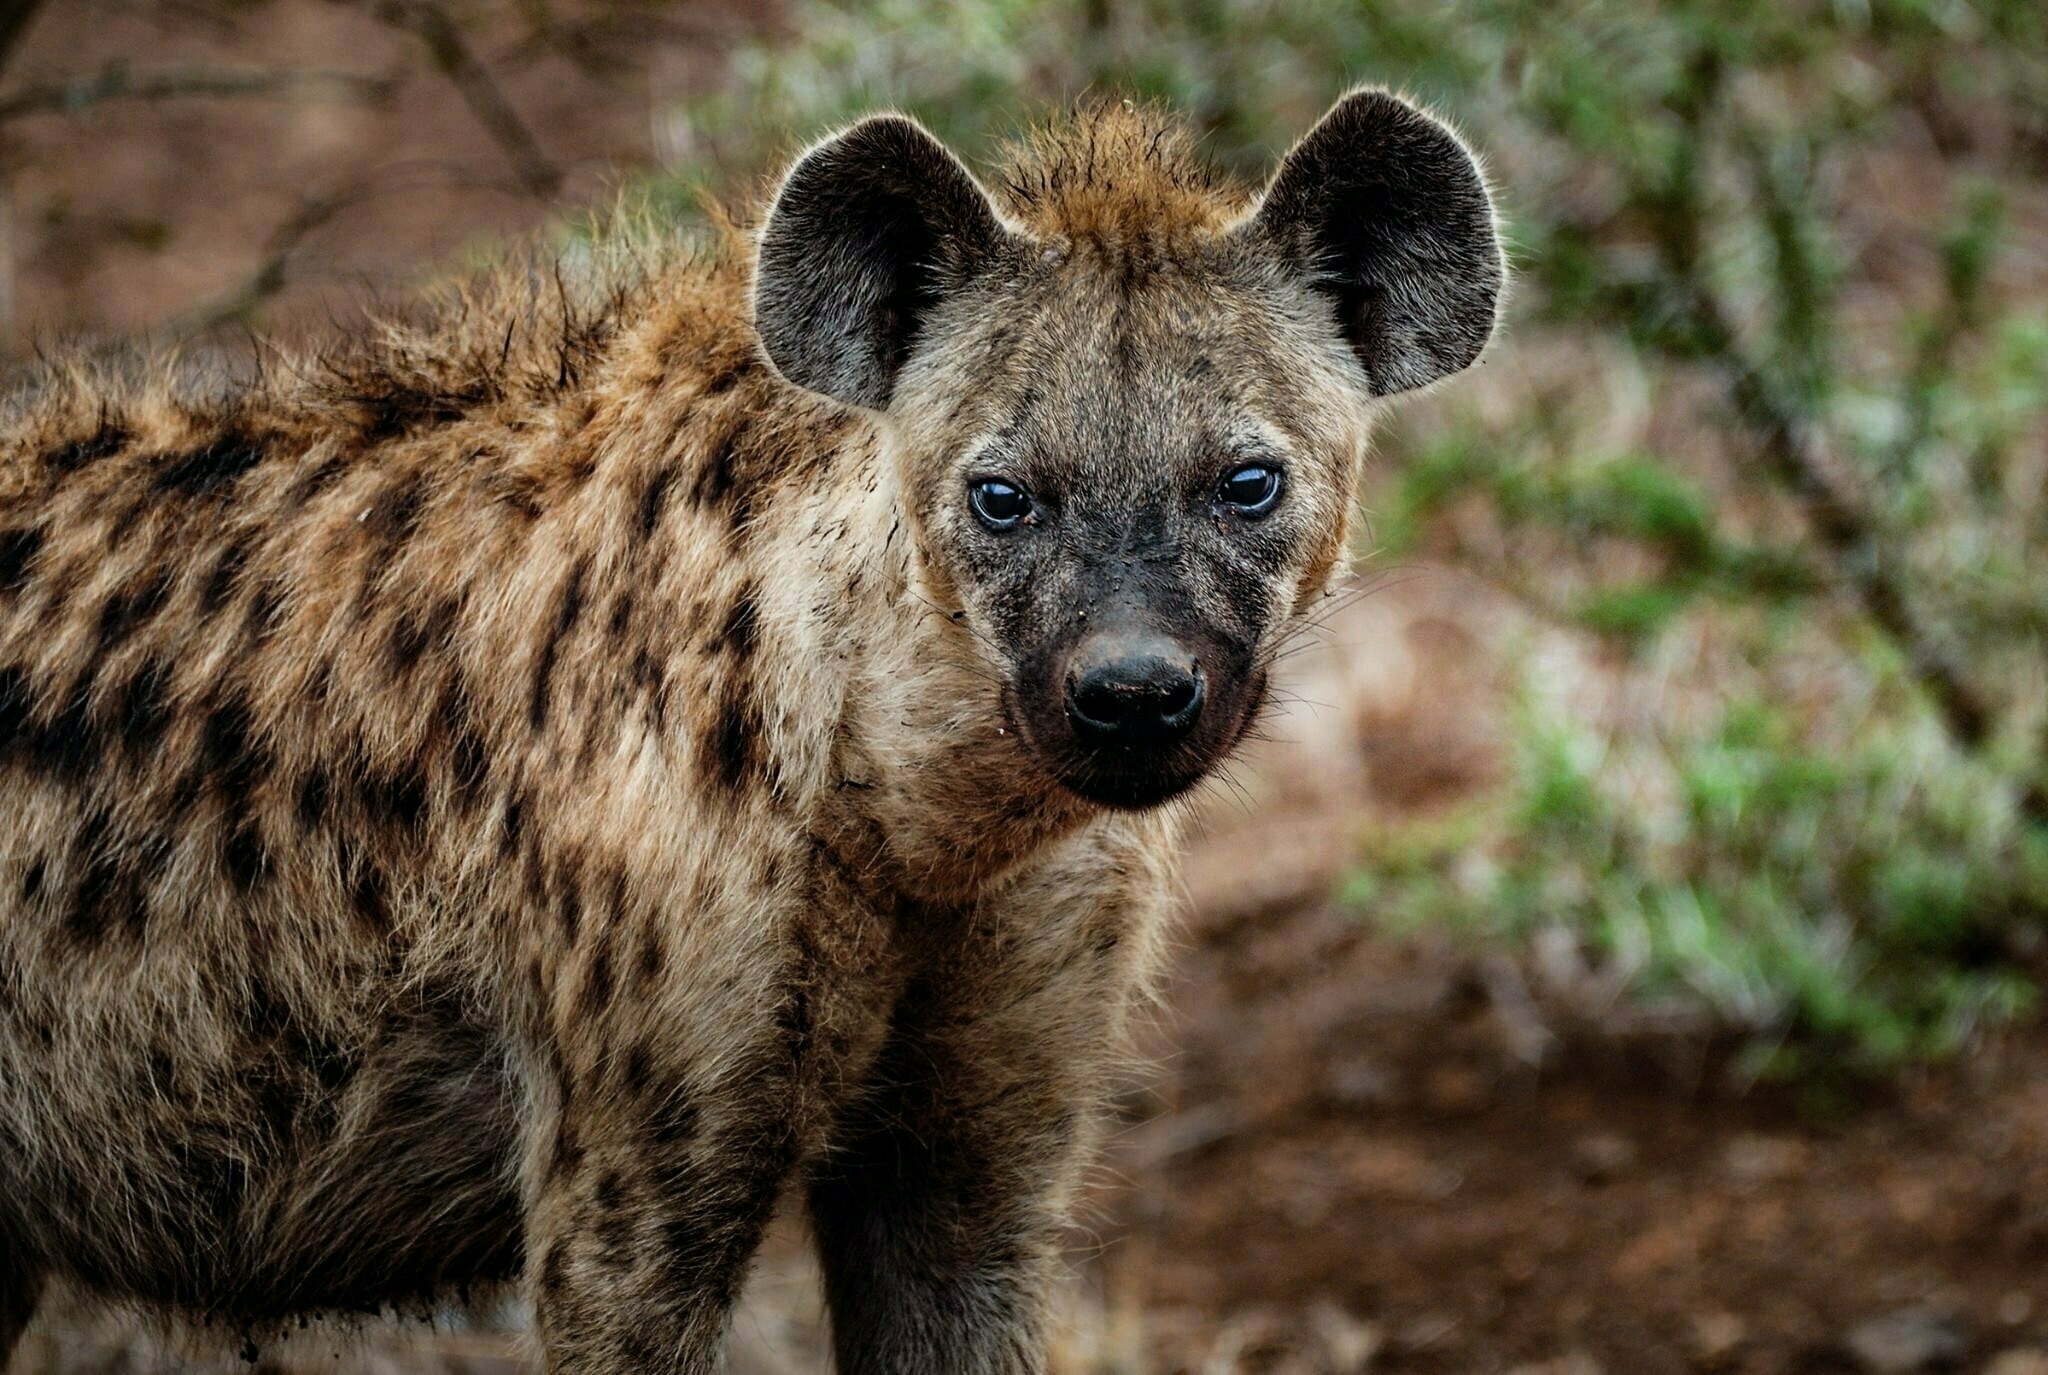 pexels frans van heerden 674053 ‘More sightings sign of rise in striped hyena population’